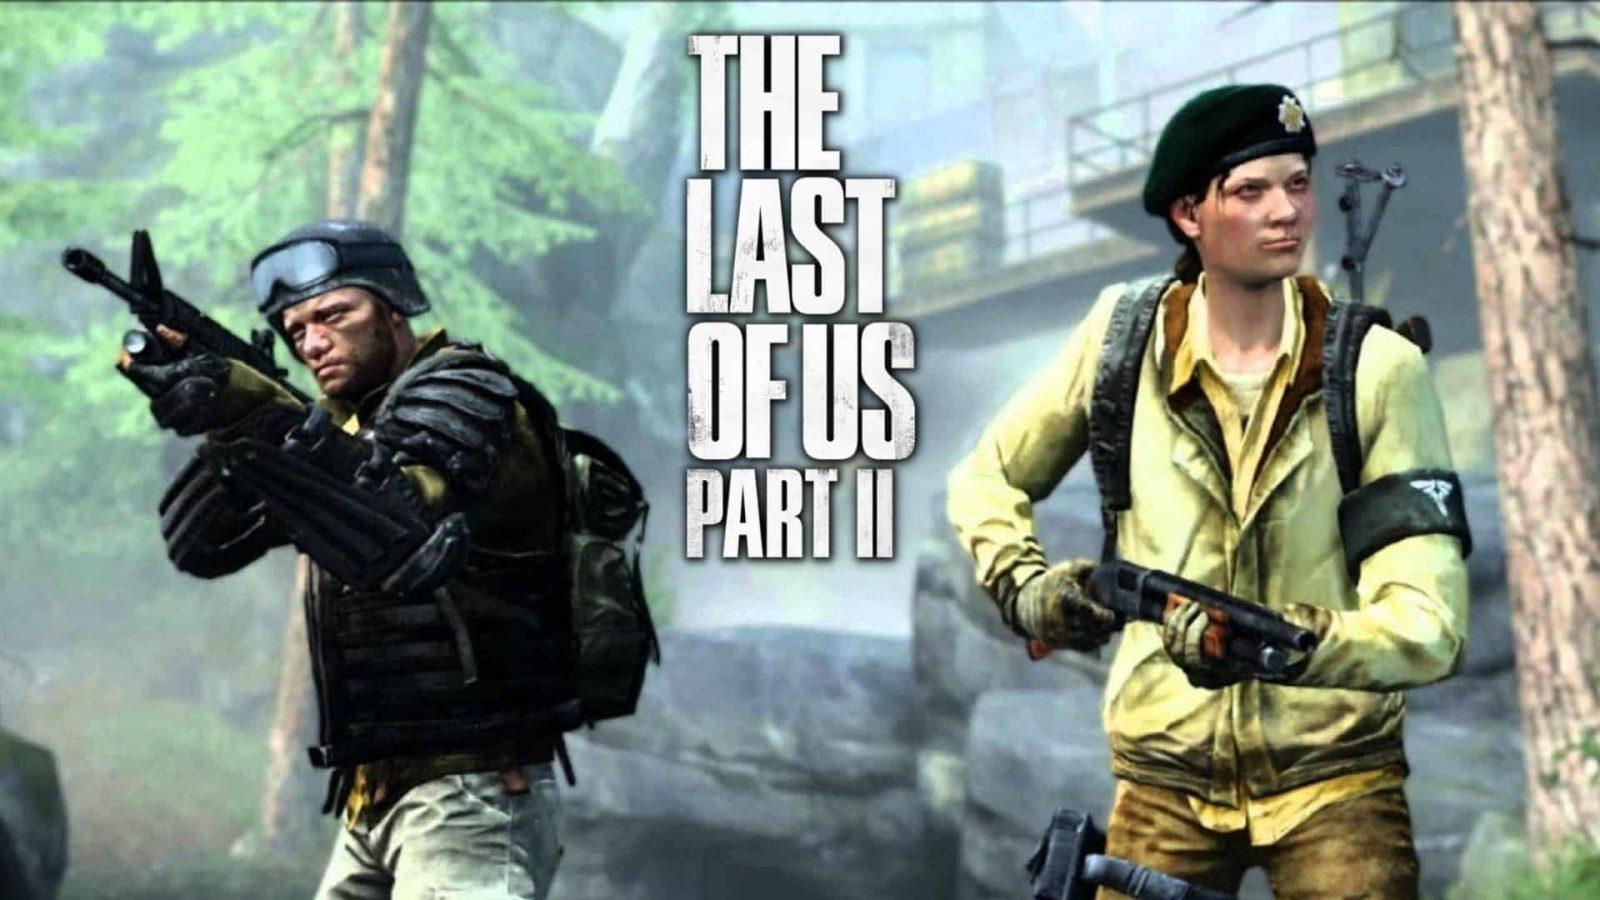 The Last of Us Multiplayer Image Leaks Online - Insider Gaming